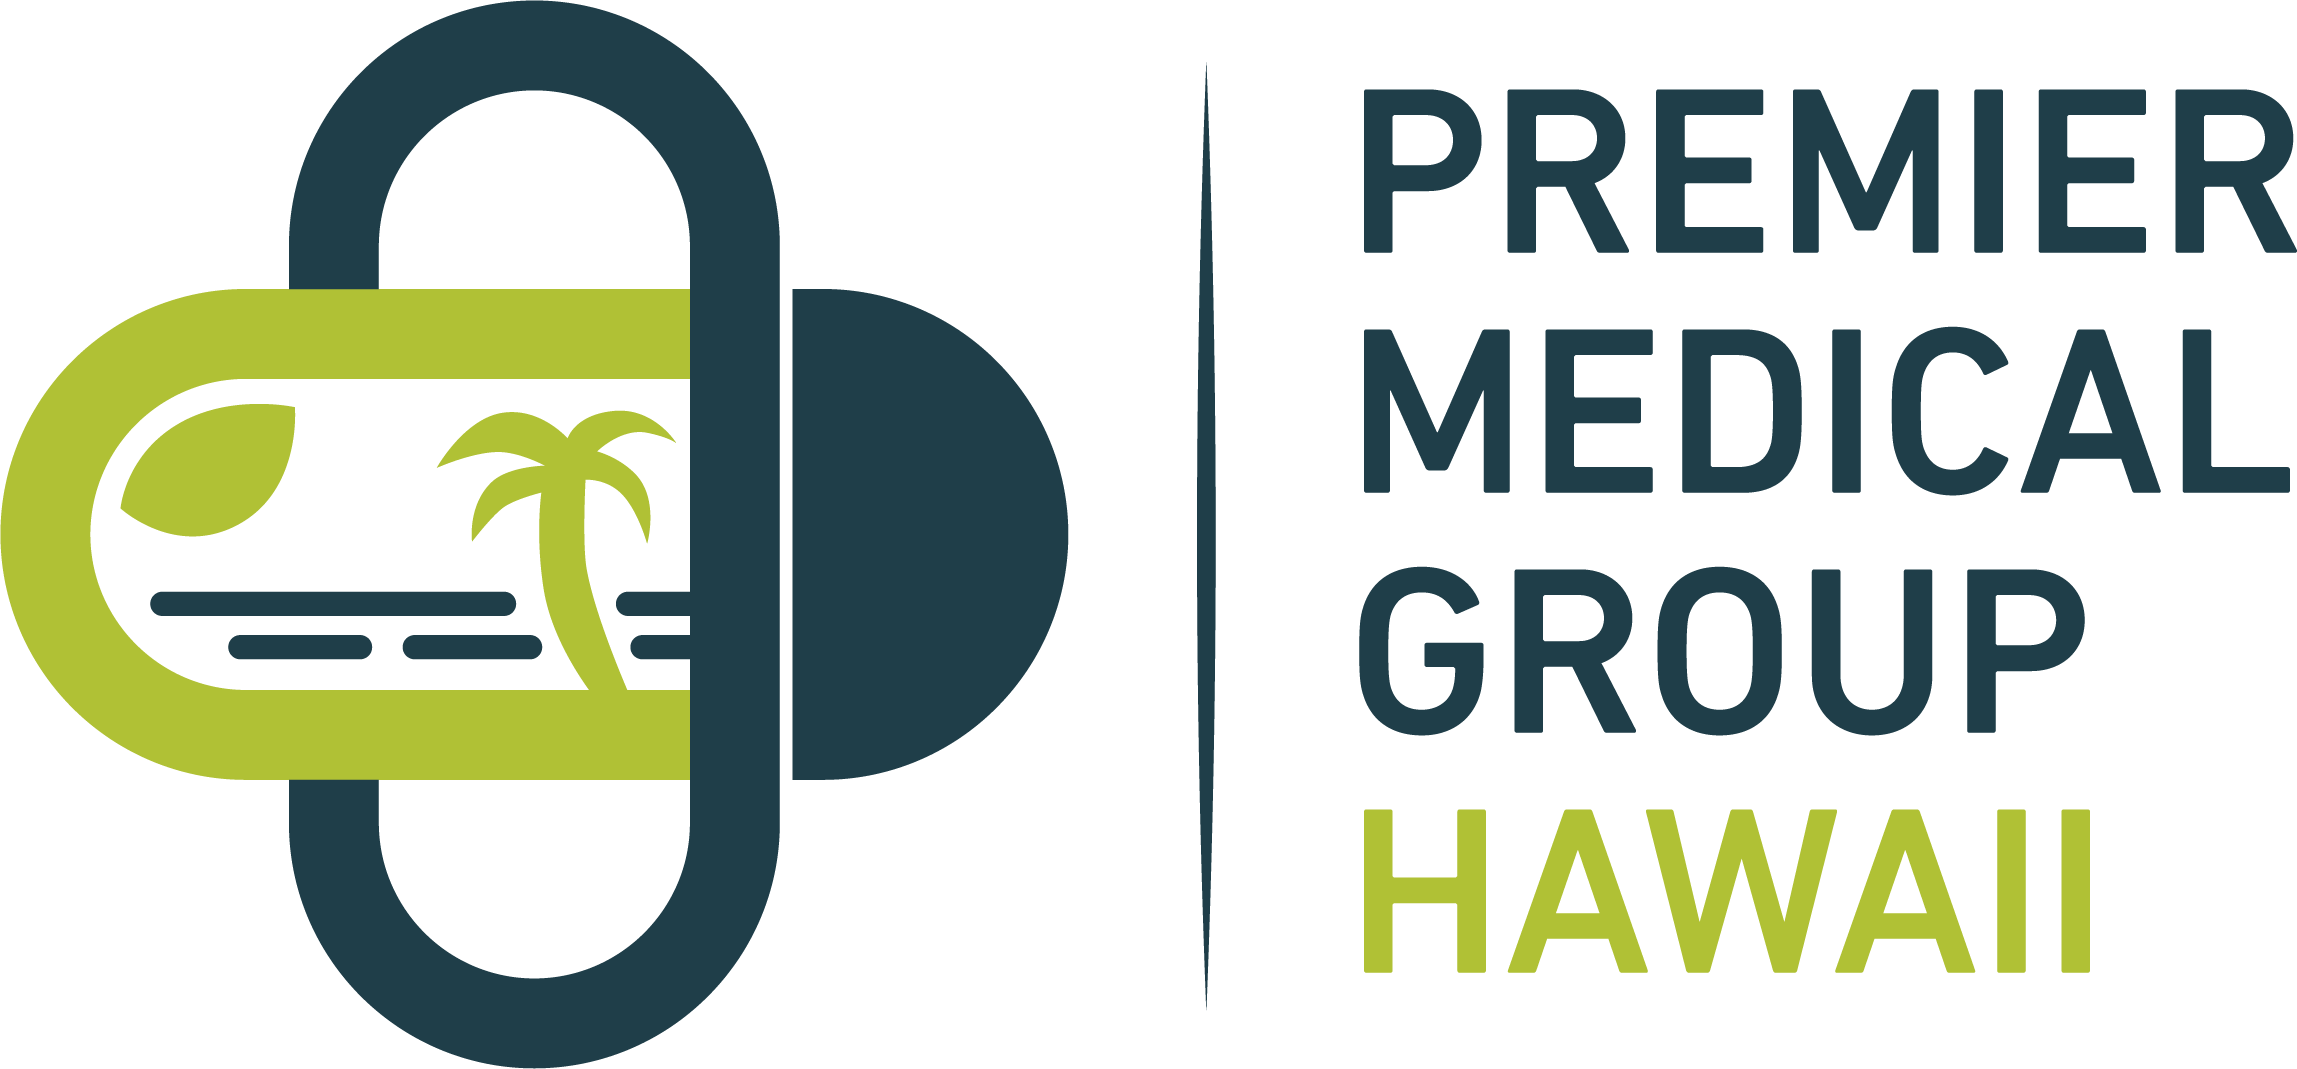 Premier Medical Group Hawaii